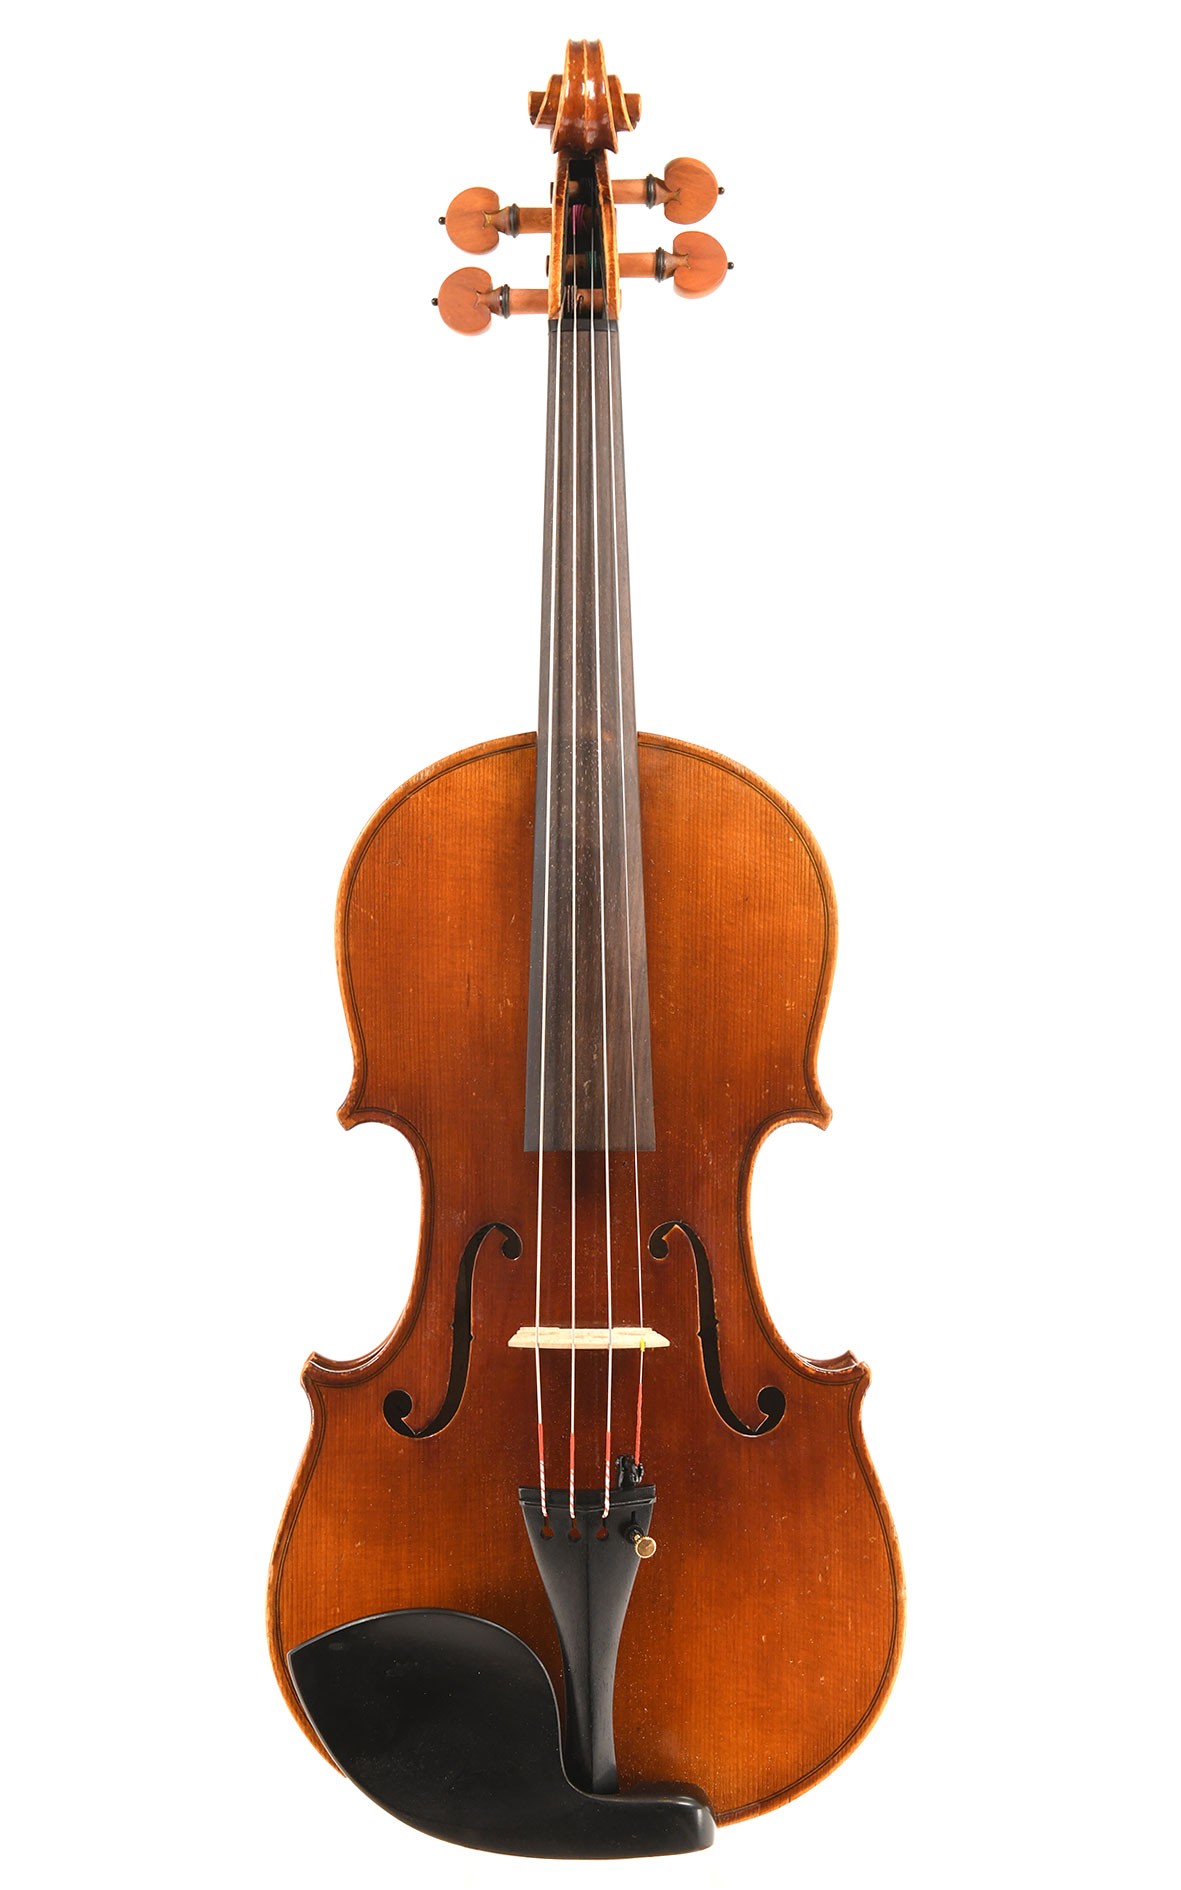 Neuner & Hornsteiner violin made in 1892